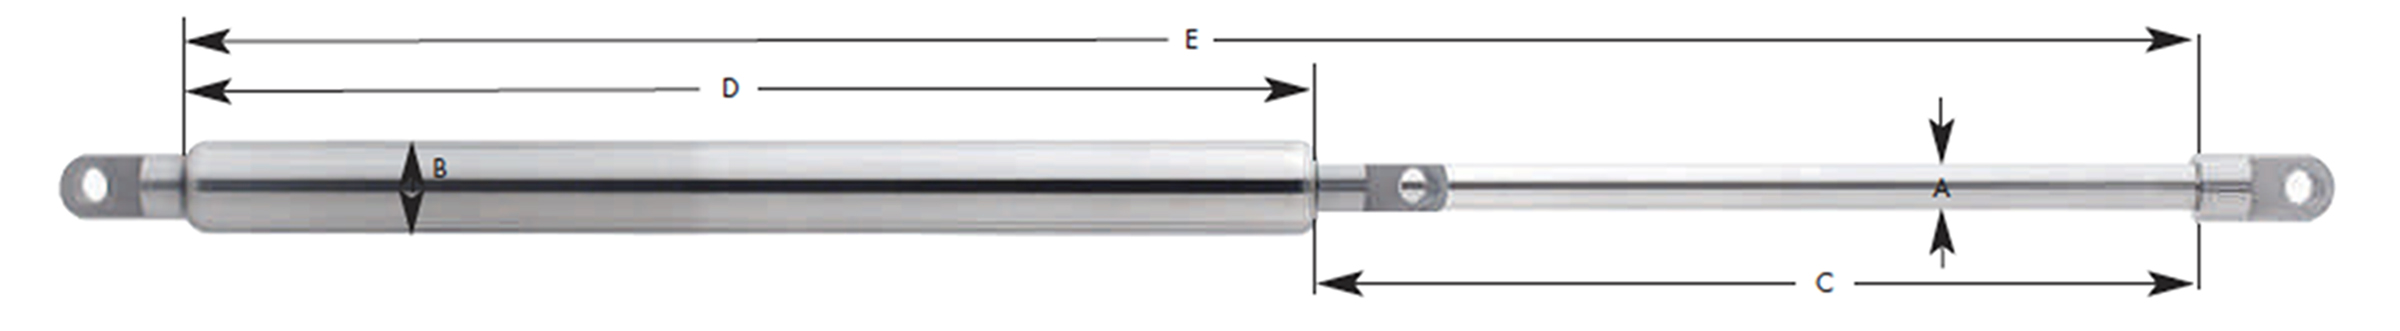 Adjustable Force Tension Gas Spring 1100-10